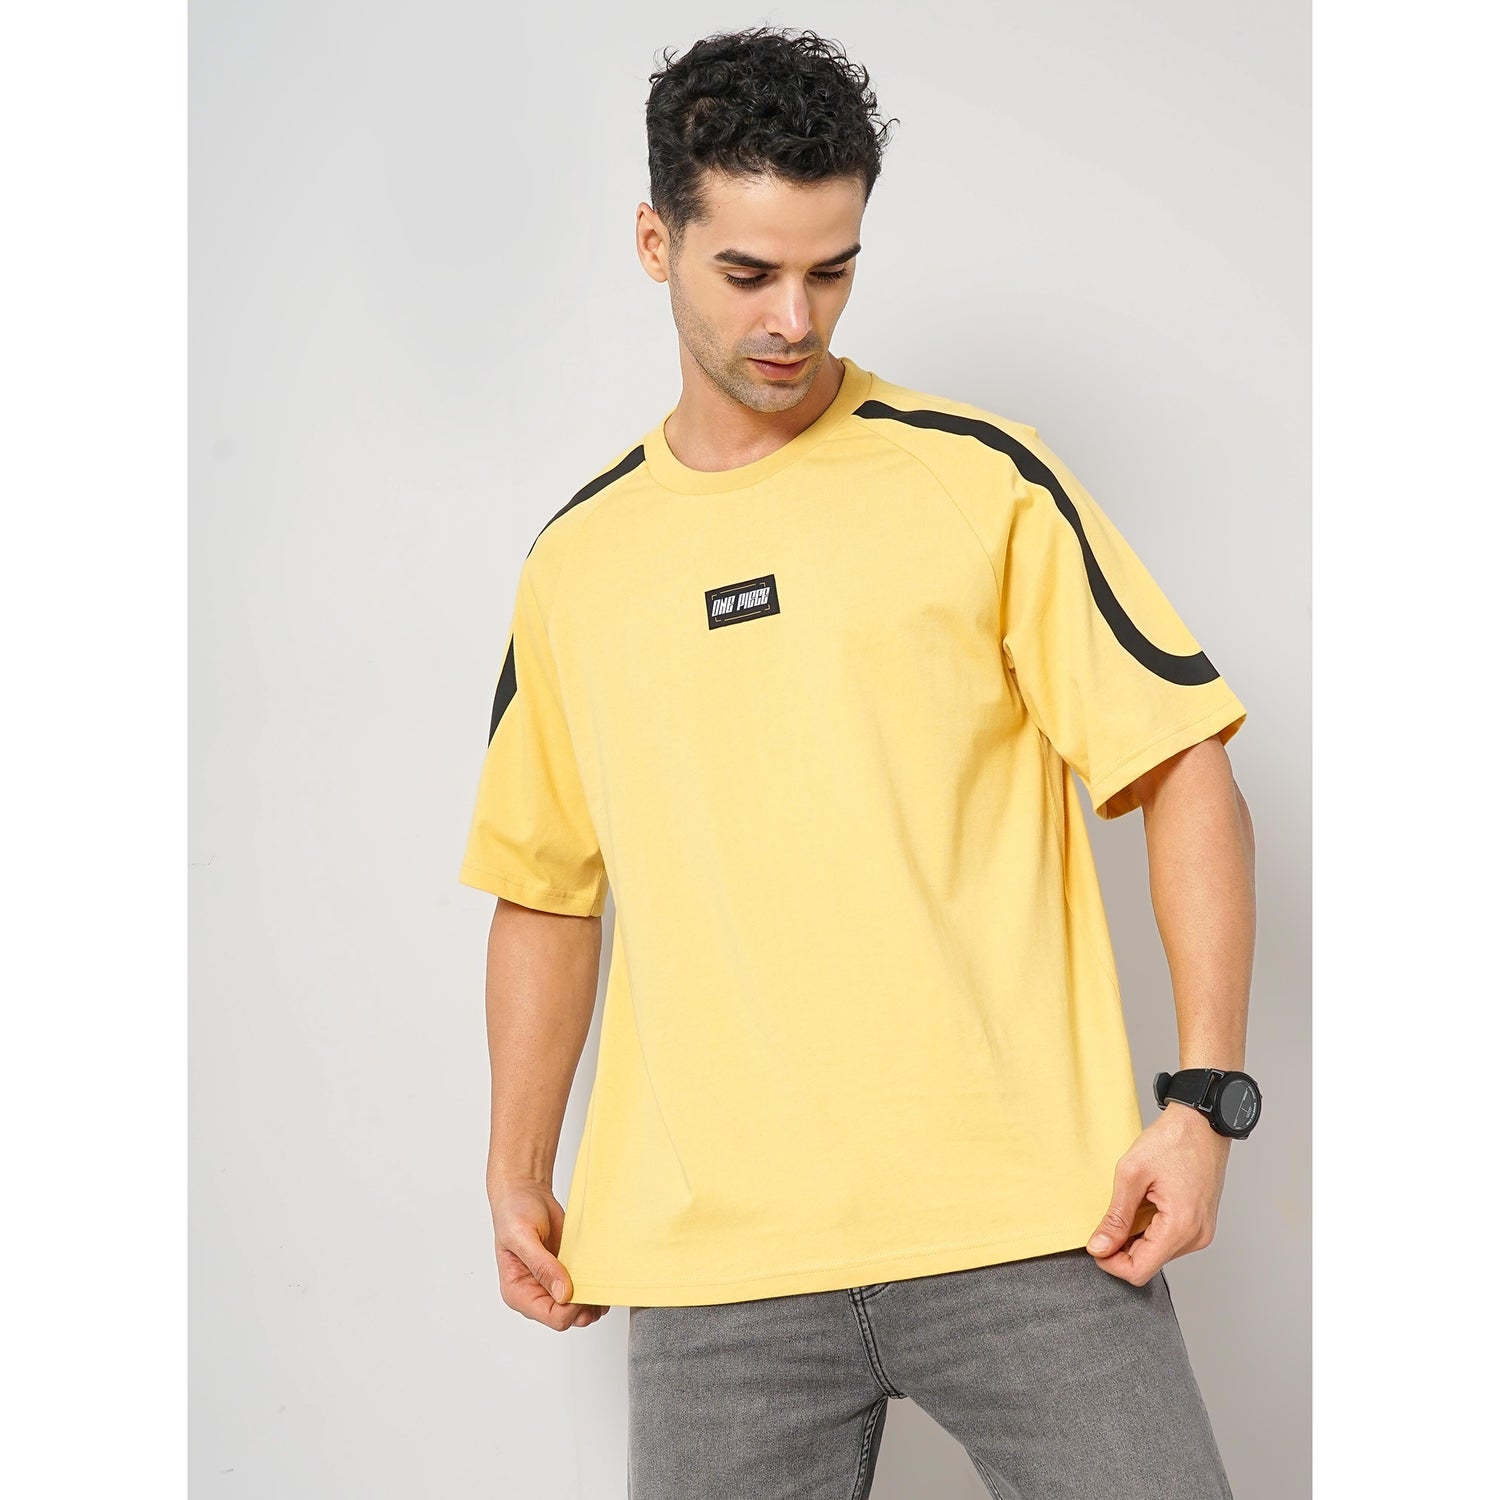 One Piece - Men's Yellow Printed Regular Fit Cotton Tshirt (LFEACETIN)